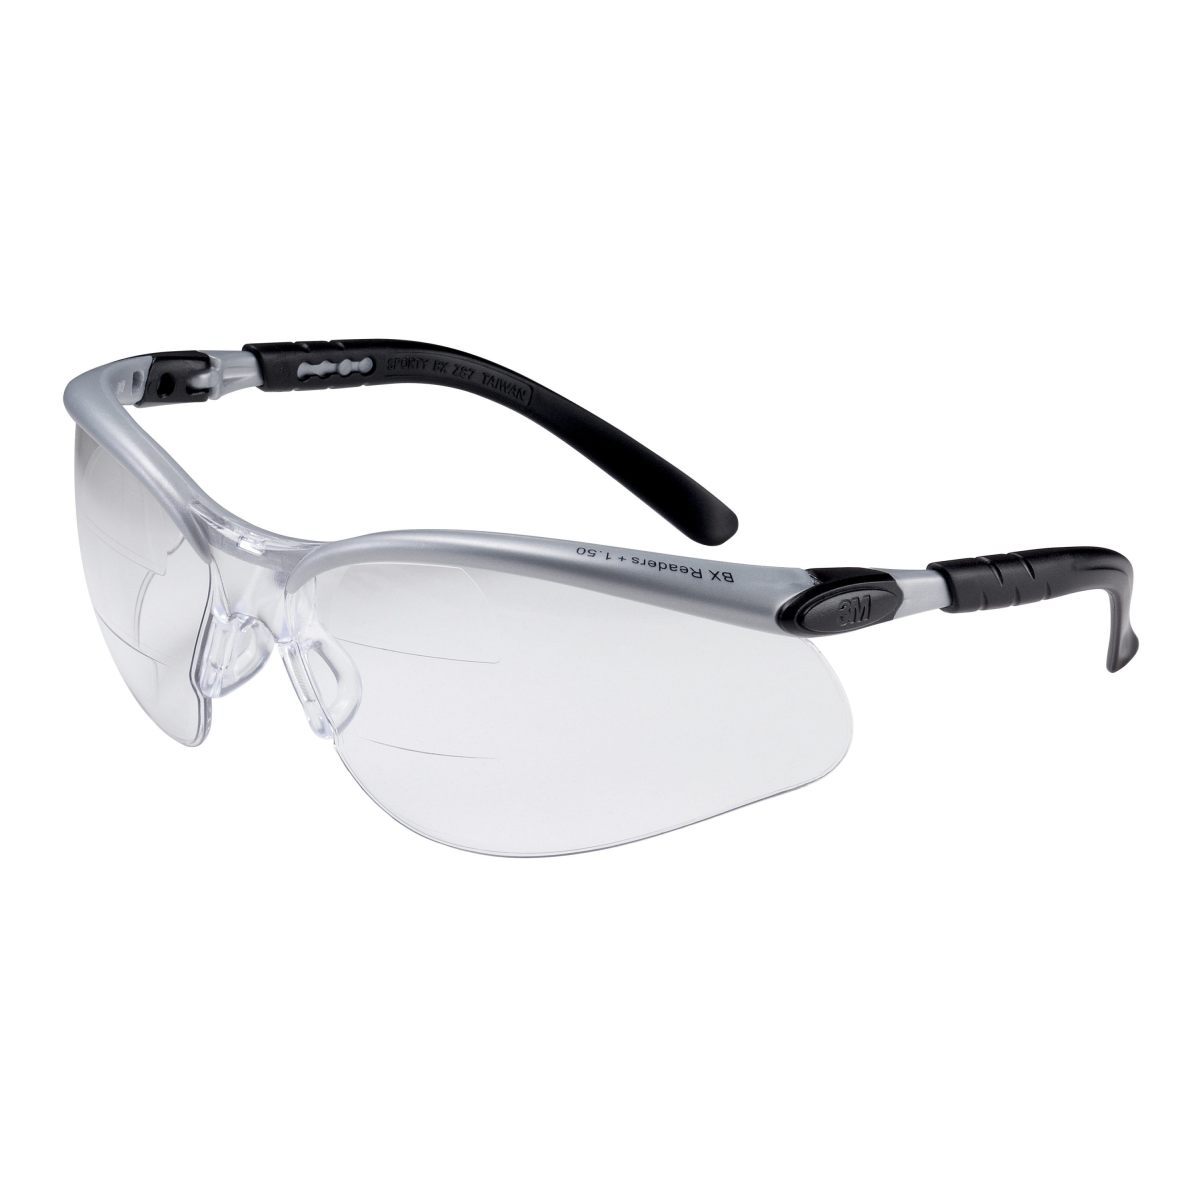 3M™ BX™ Dual Reader Protective Eyewear 11458-00000-20 Clear Anti-Fog Lens, Silver/Black Frame, +2.0 Top/Bottom Diopter (Availabi